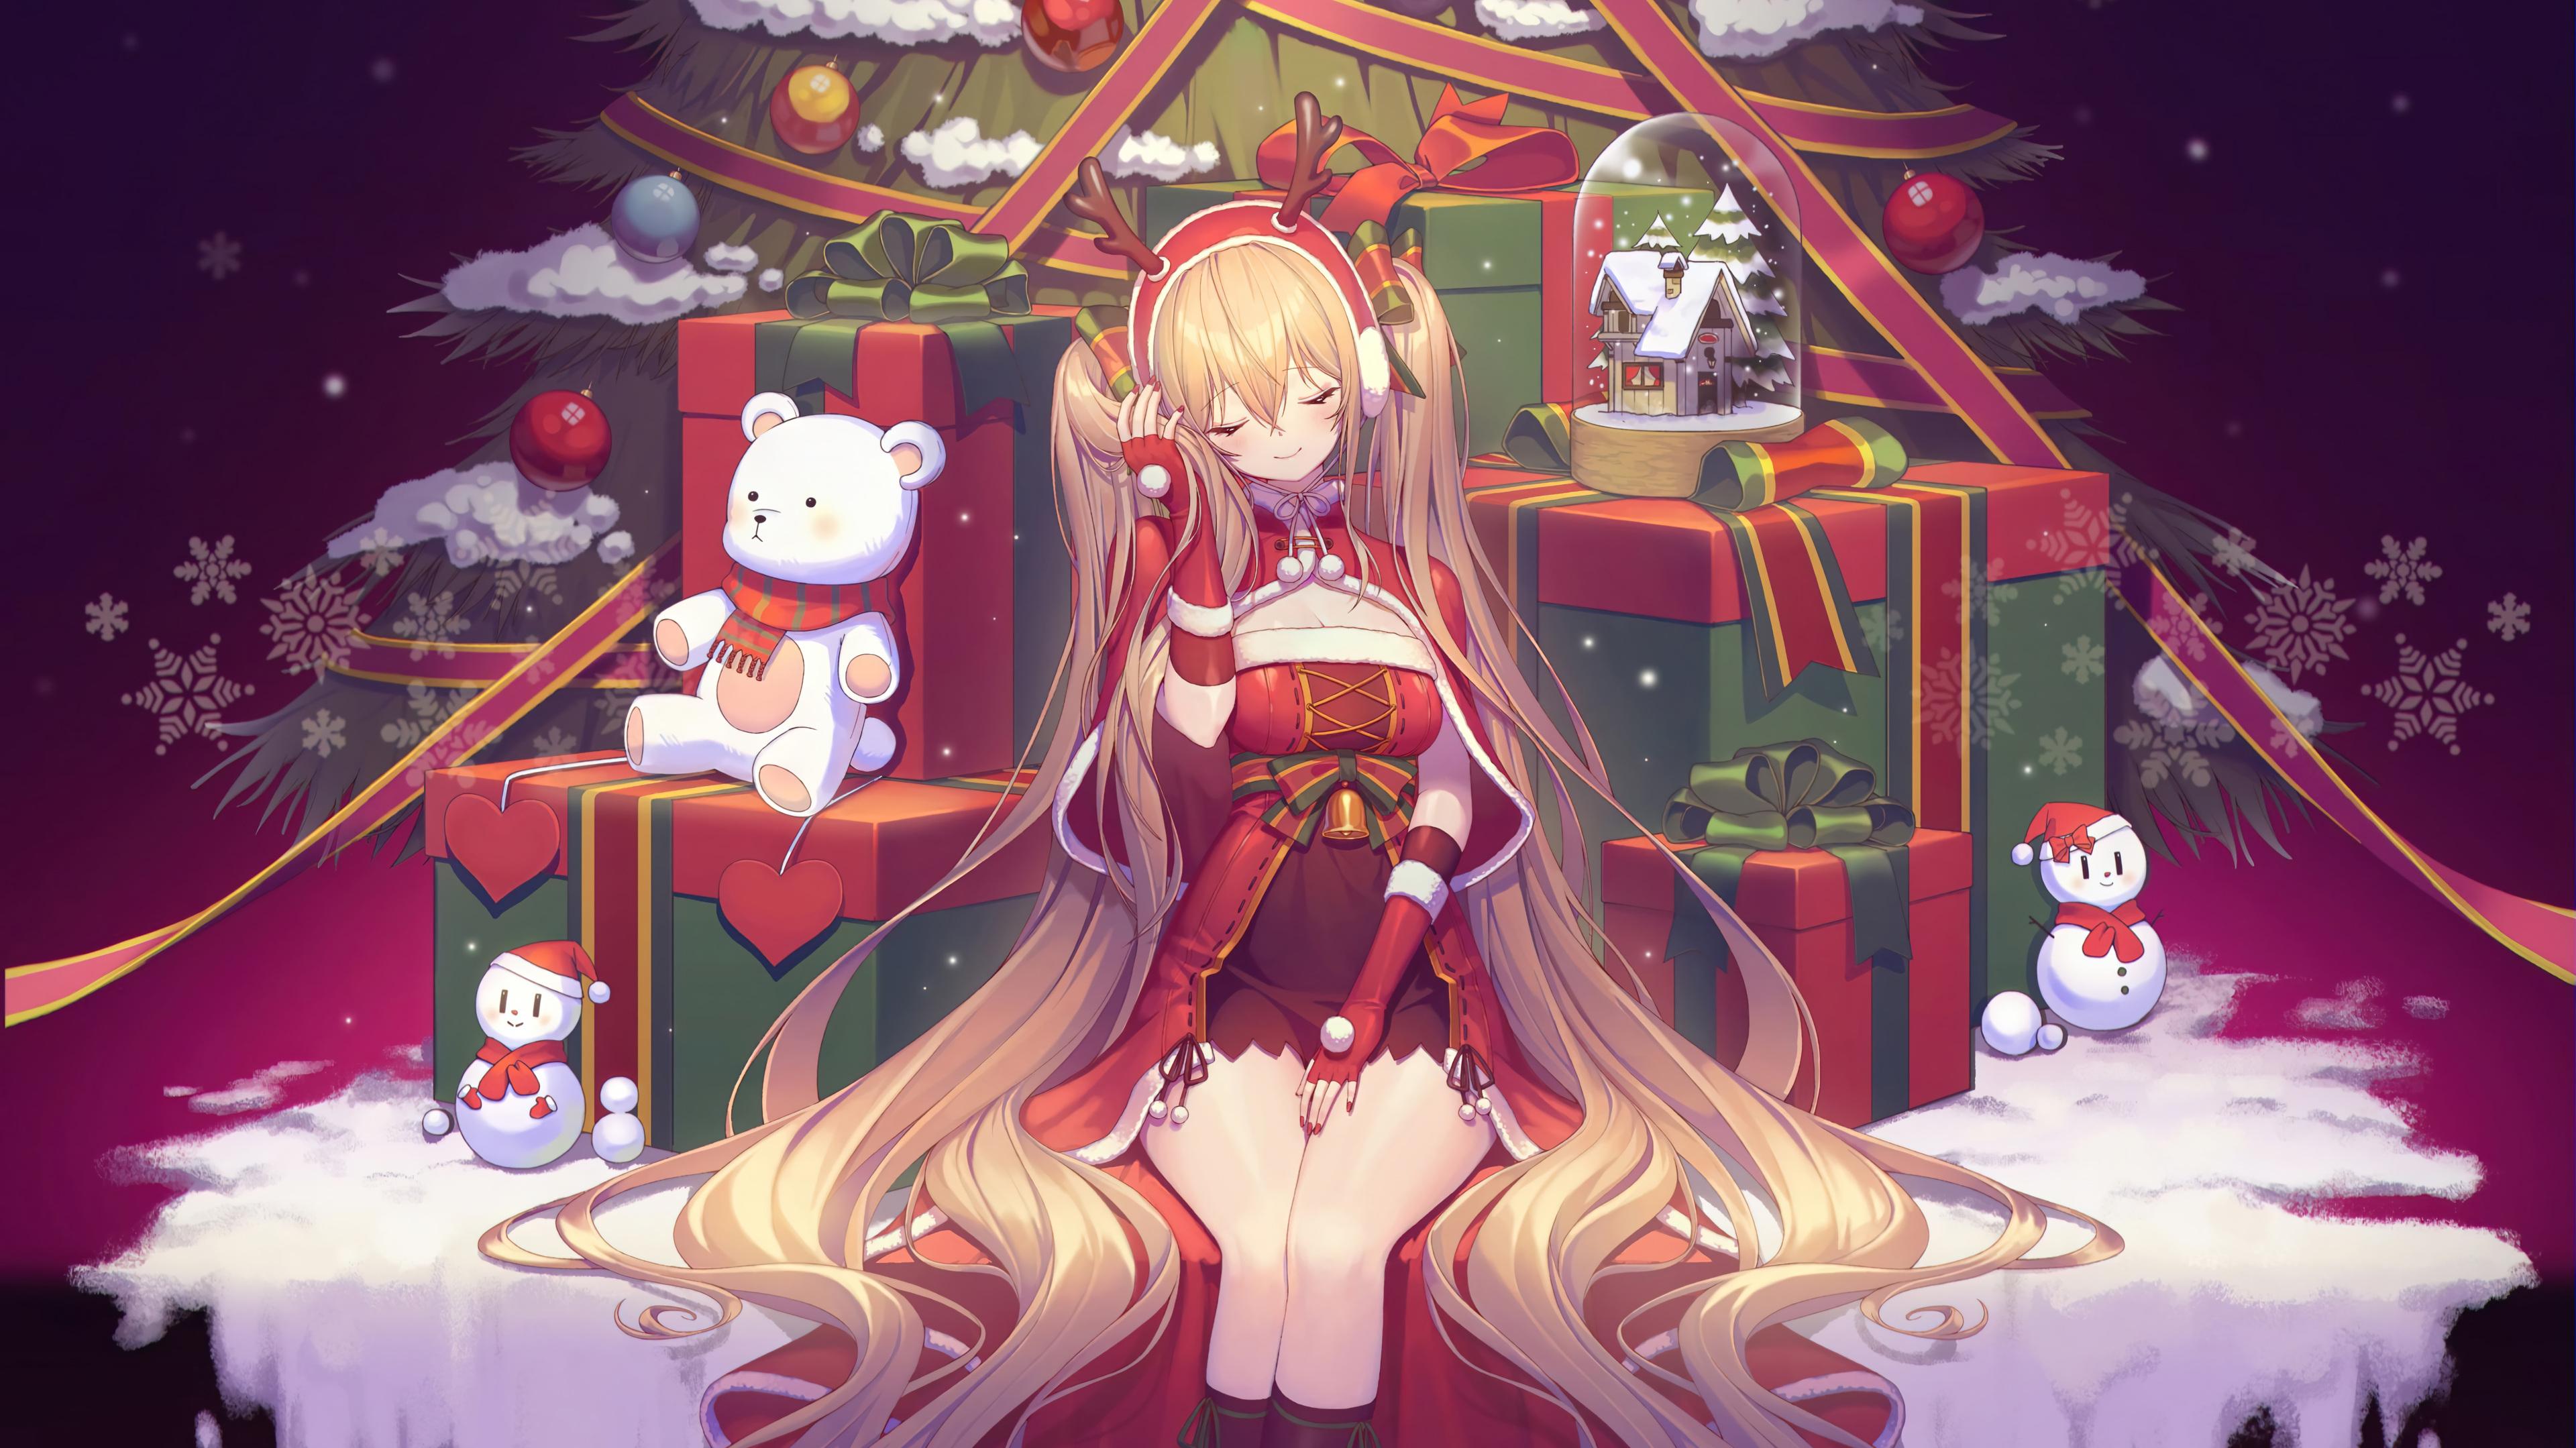 Christmas Tree Gifts Anime Santa Girl 4K Wallpaper iPhone HD Phone